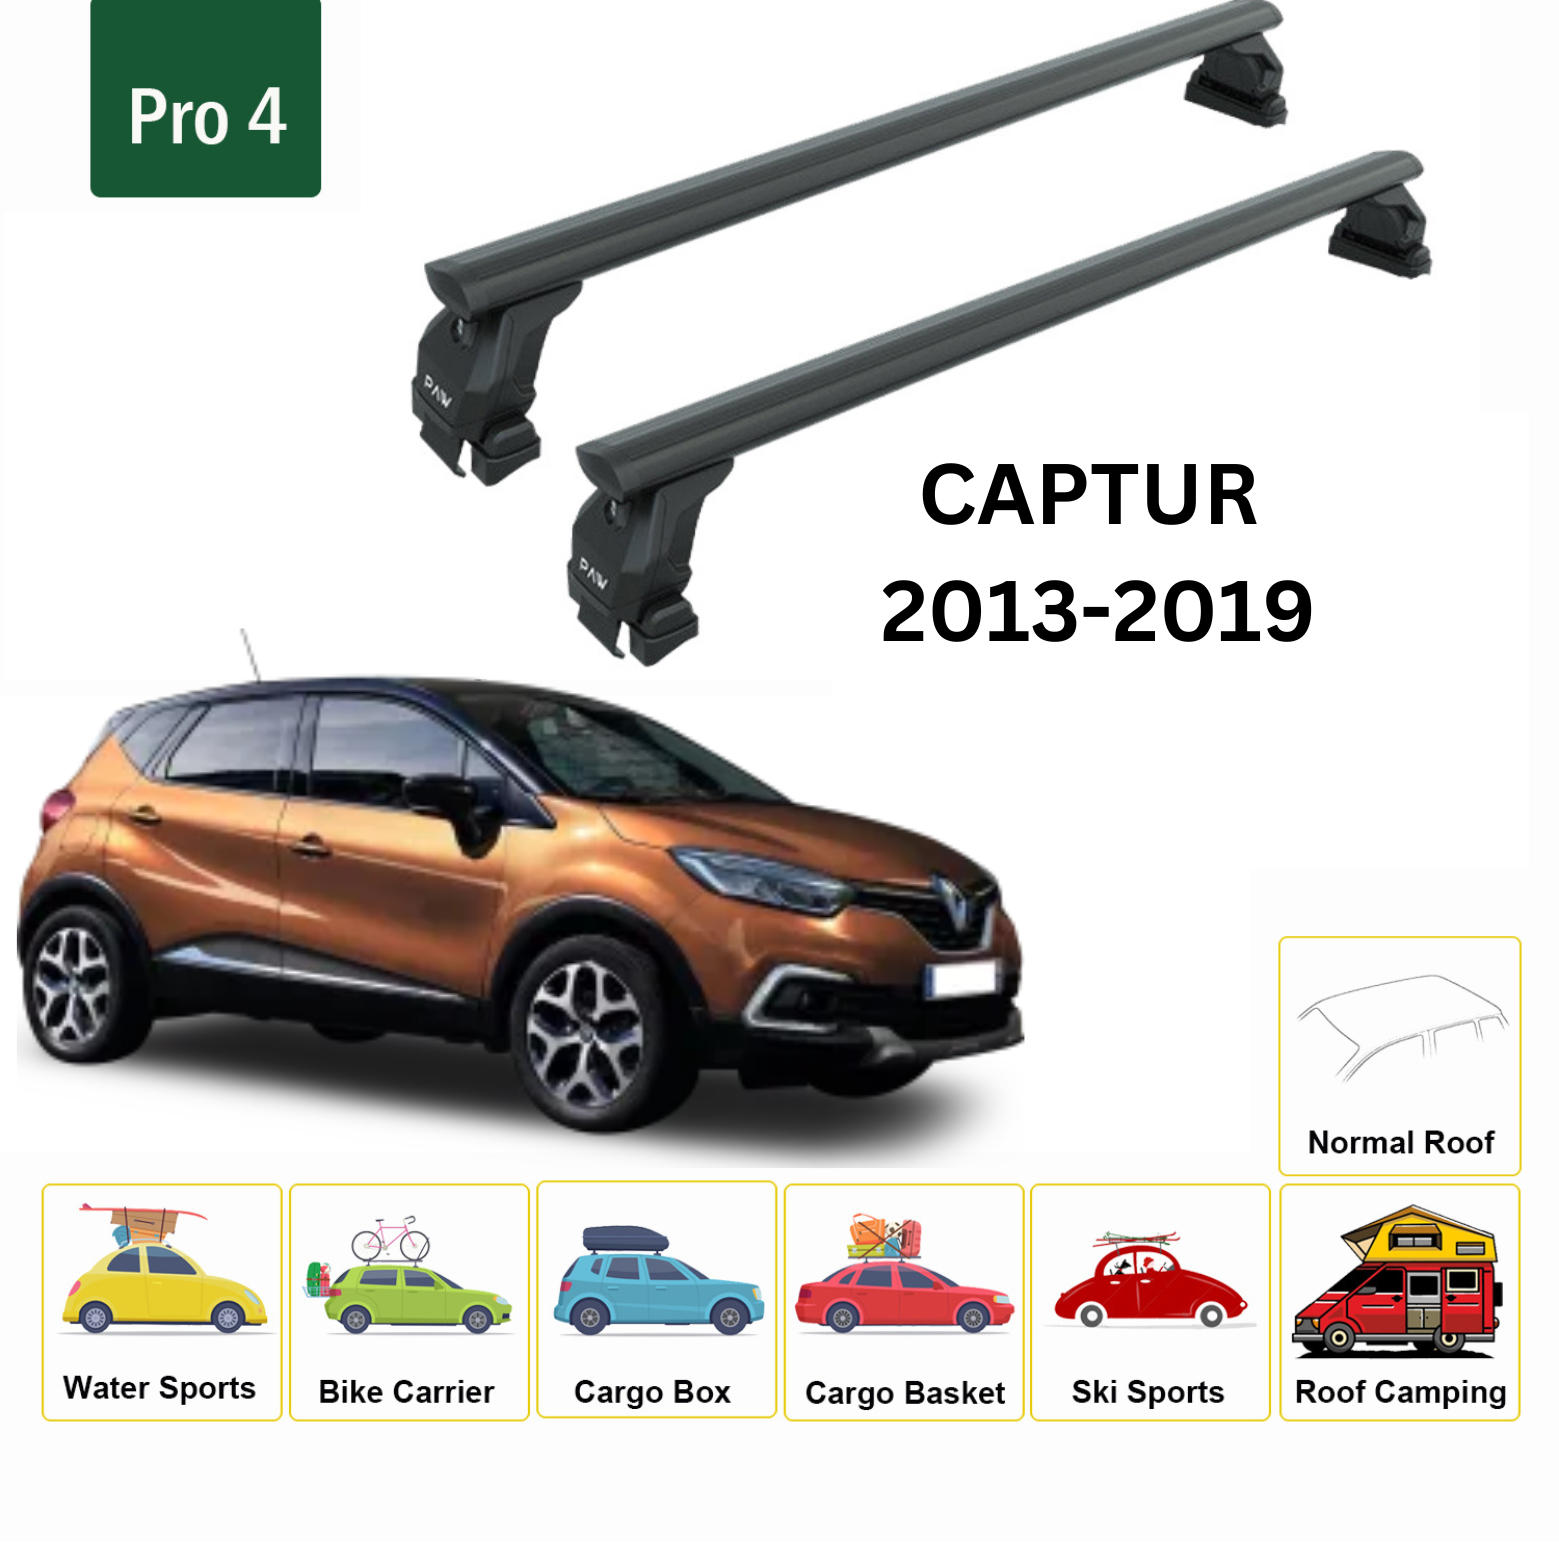 For Renault Captur 2013-2019 Roof Rack System, Aluminium Cross Bar, Metal Bracket, Normal Roof, Black - 0